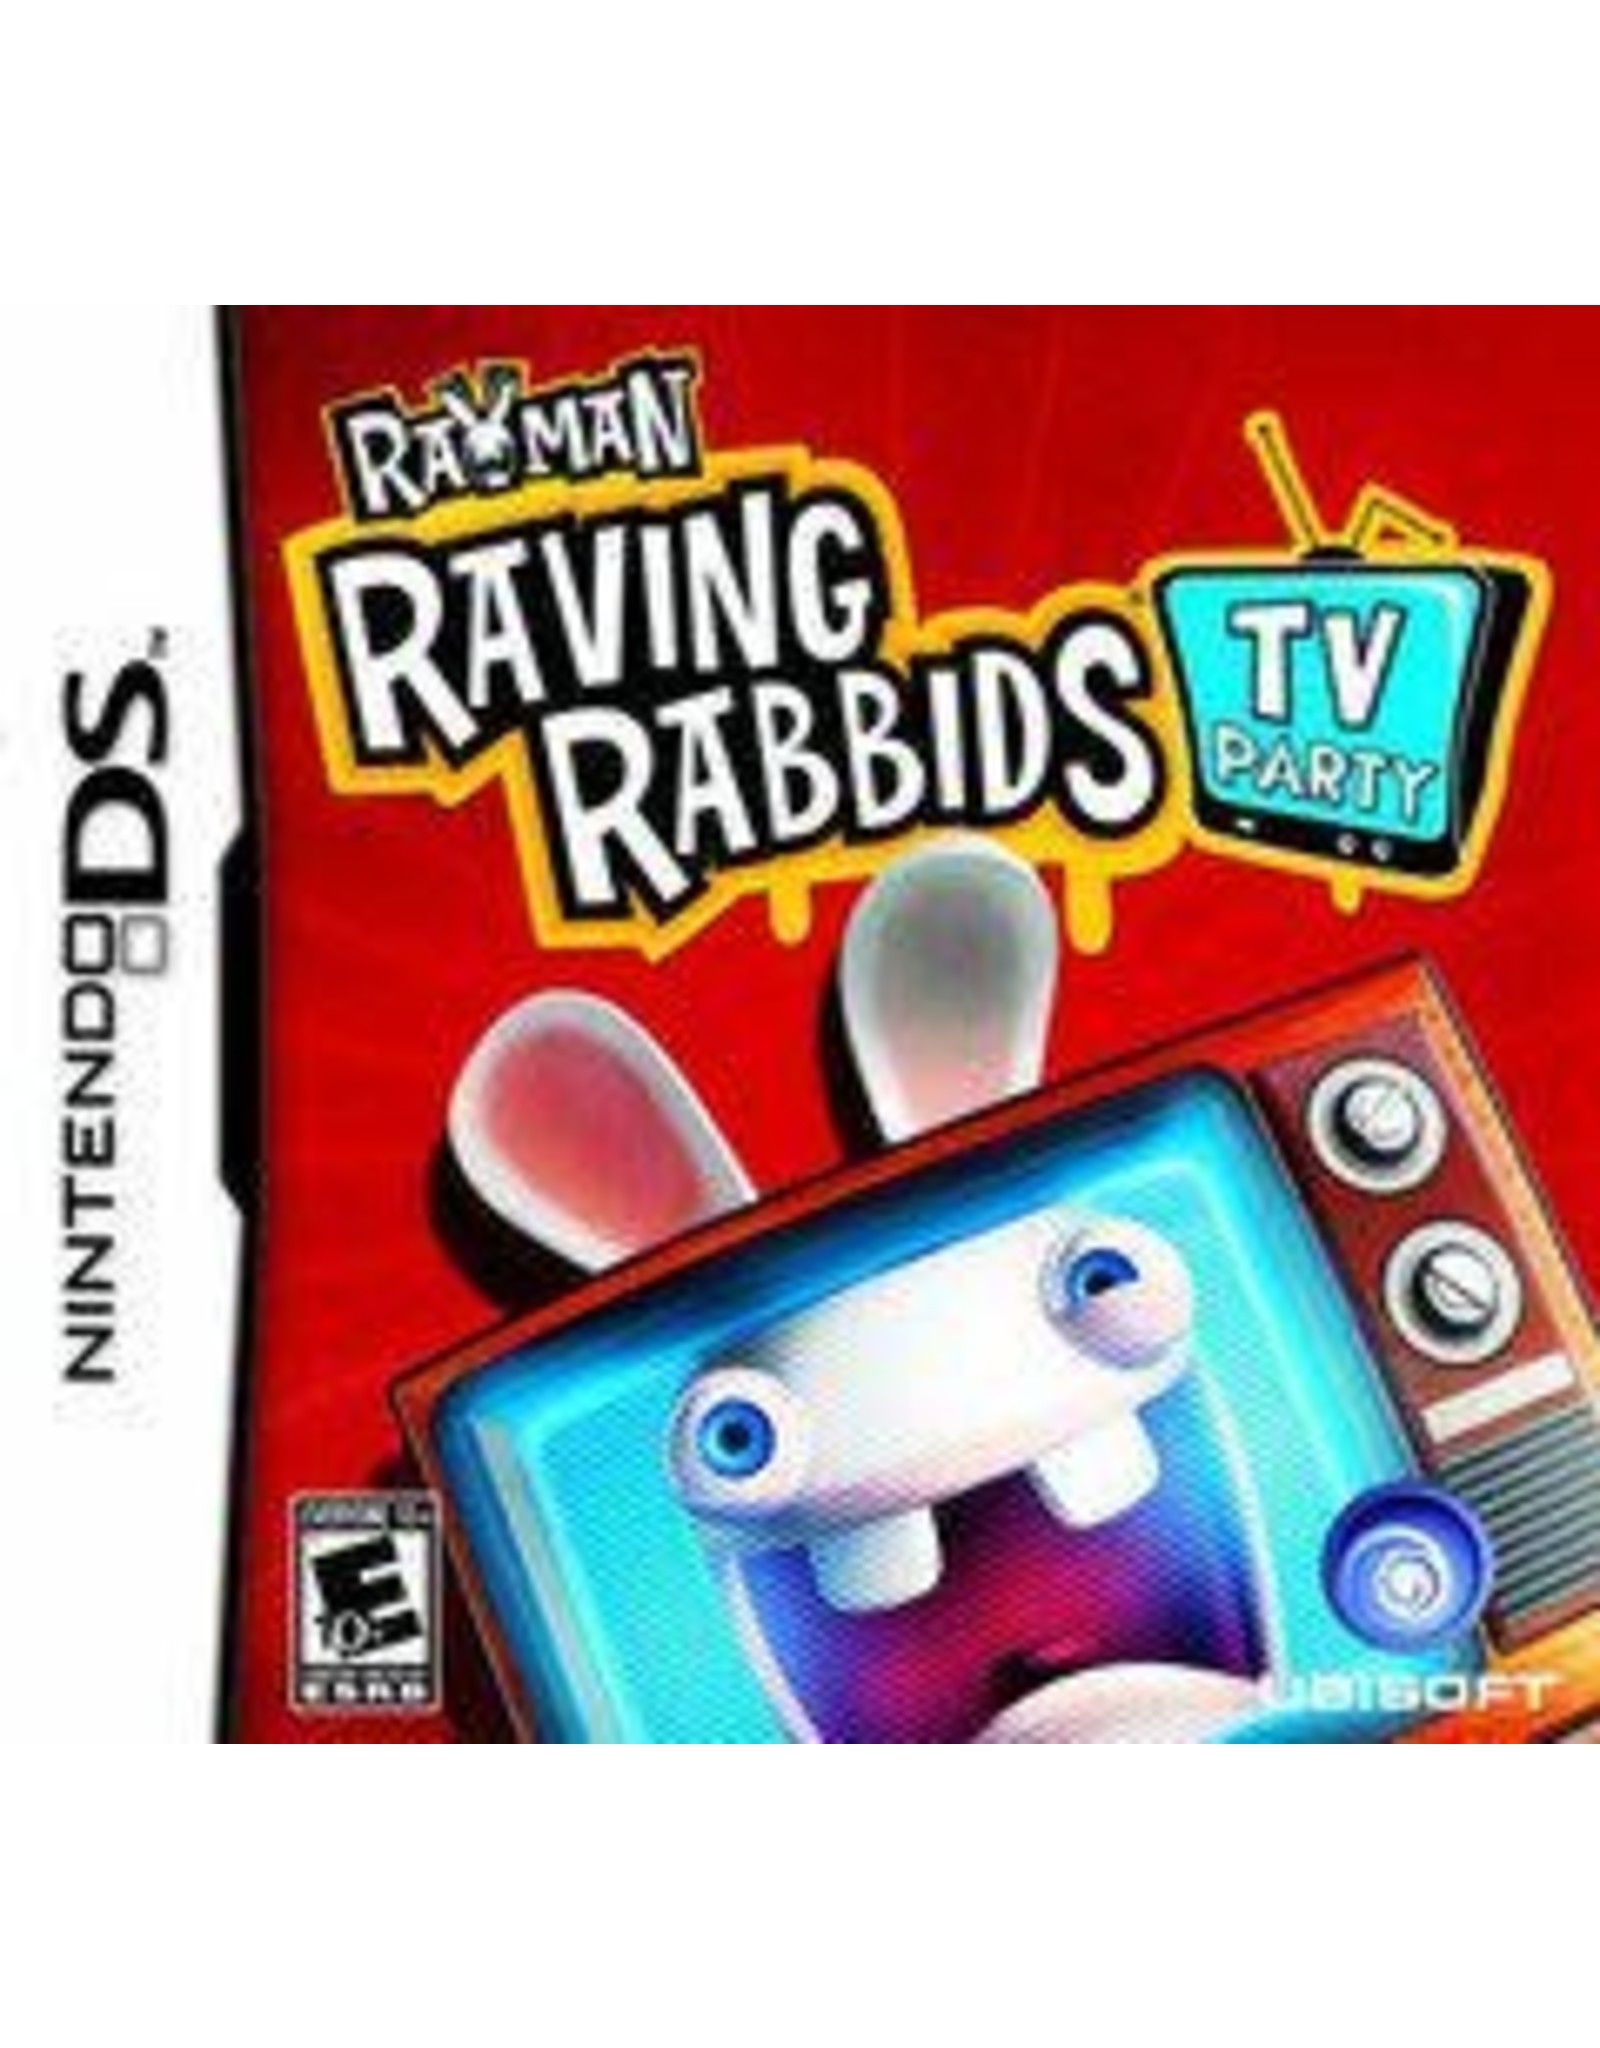 Nintendo DS Rayman Raving Rabbids TV Party (CiB)